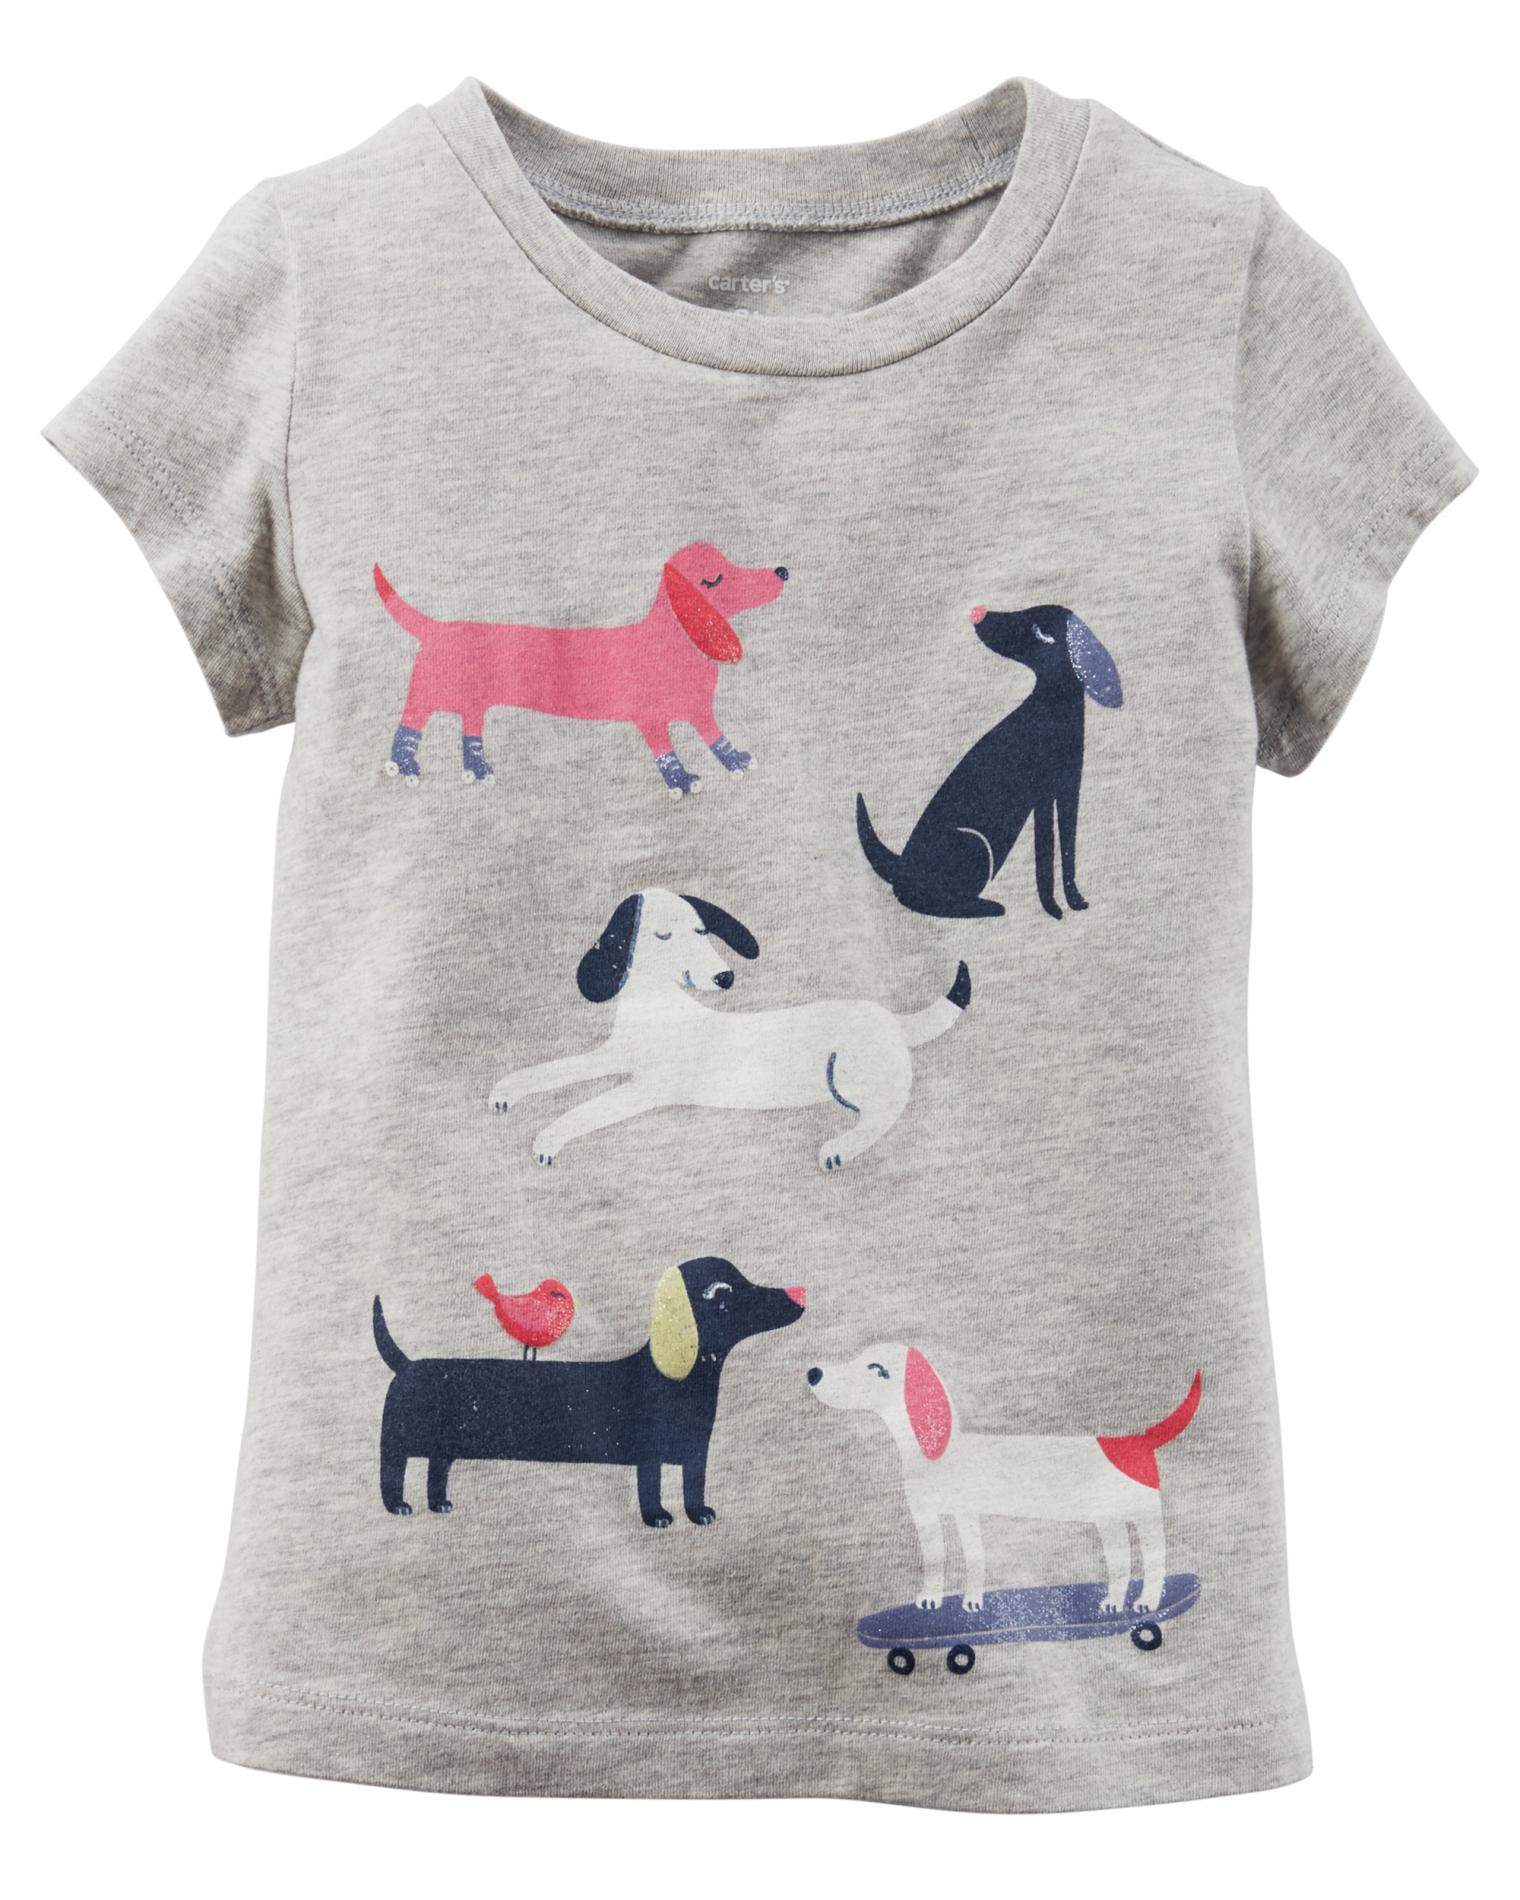 Carter's Girls' Short-Sleeve Graphic T-Shirt - Dogs